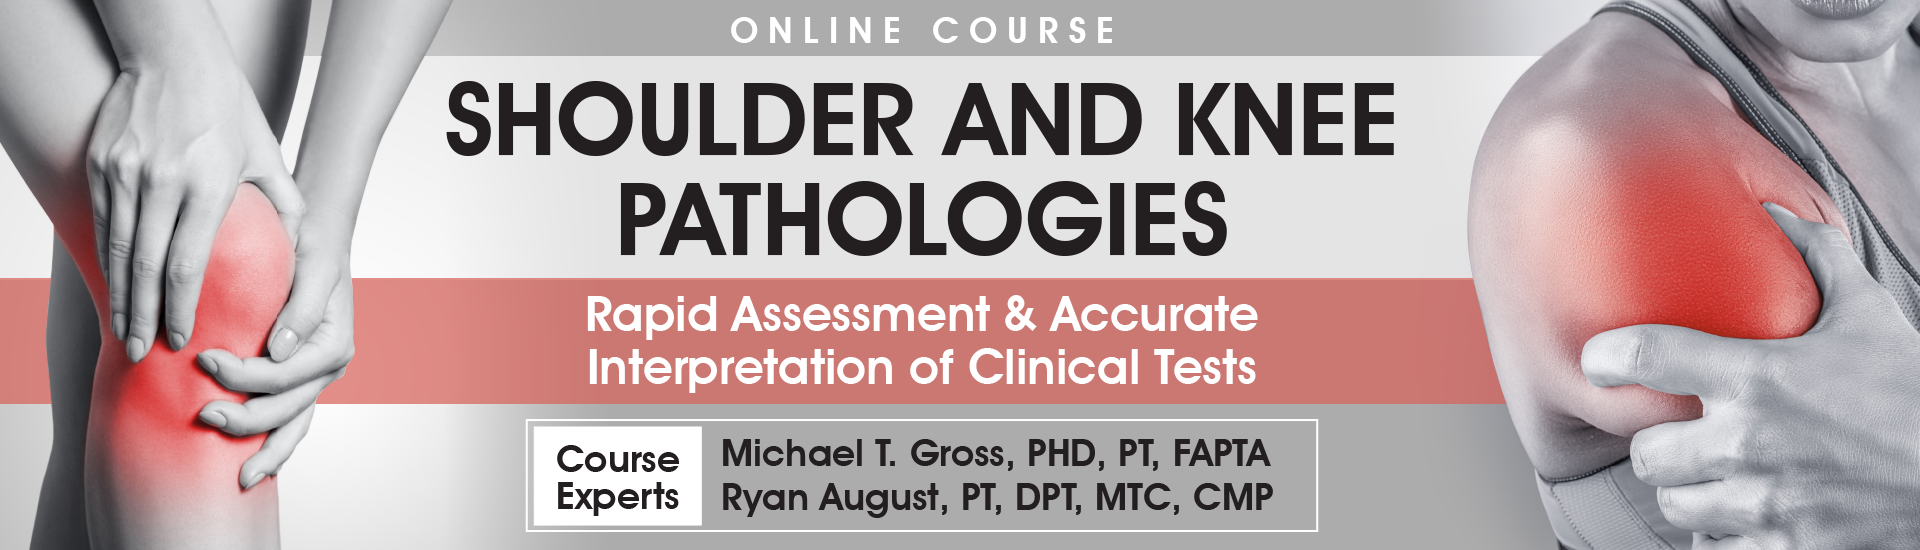 Shoulder and Knee Pathologies Online Course